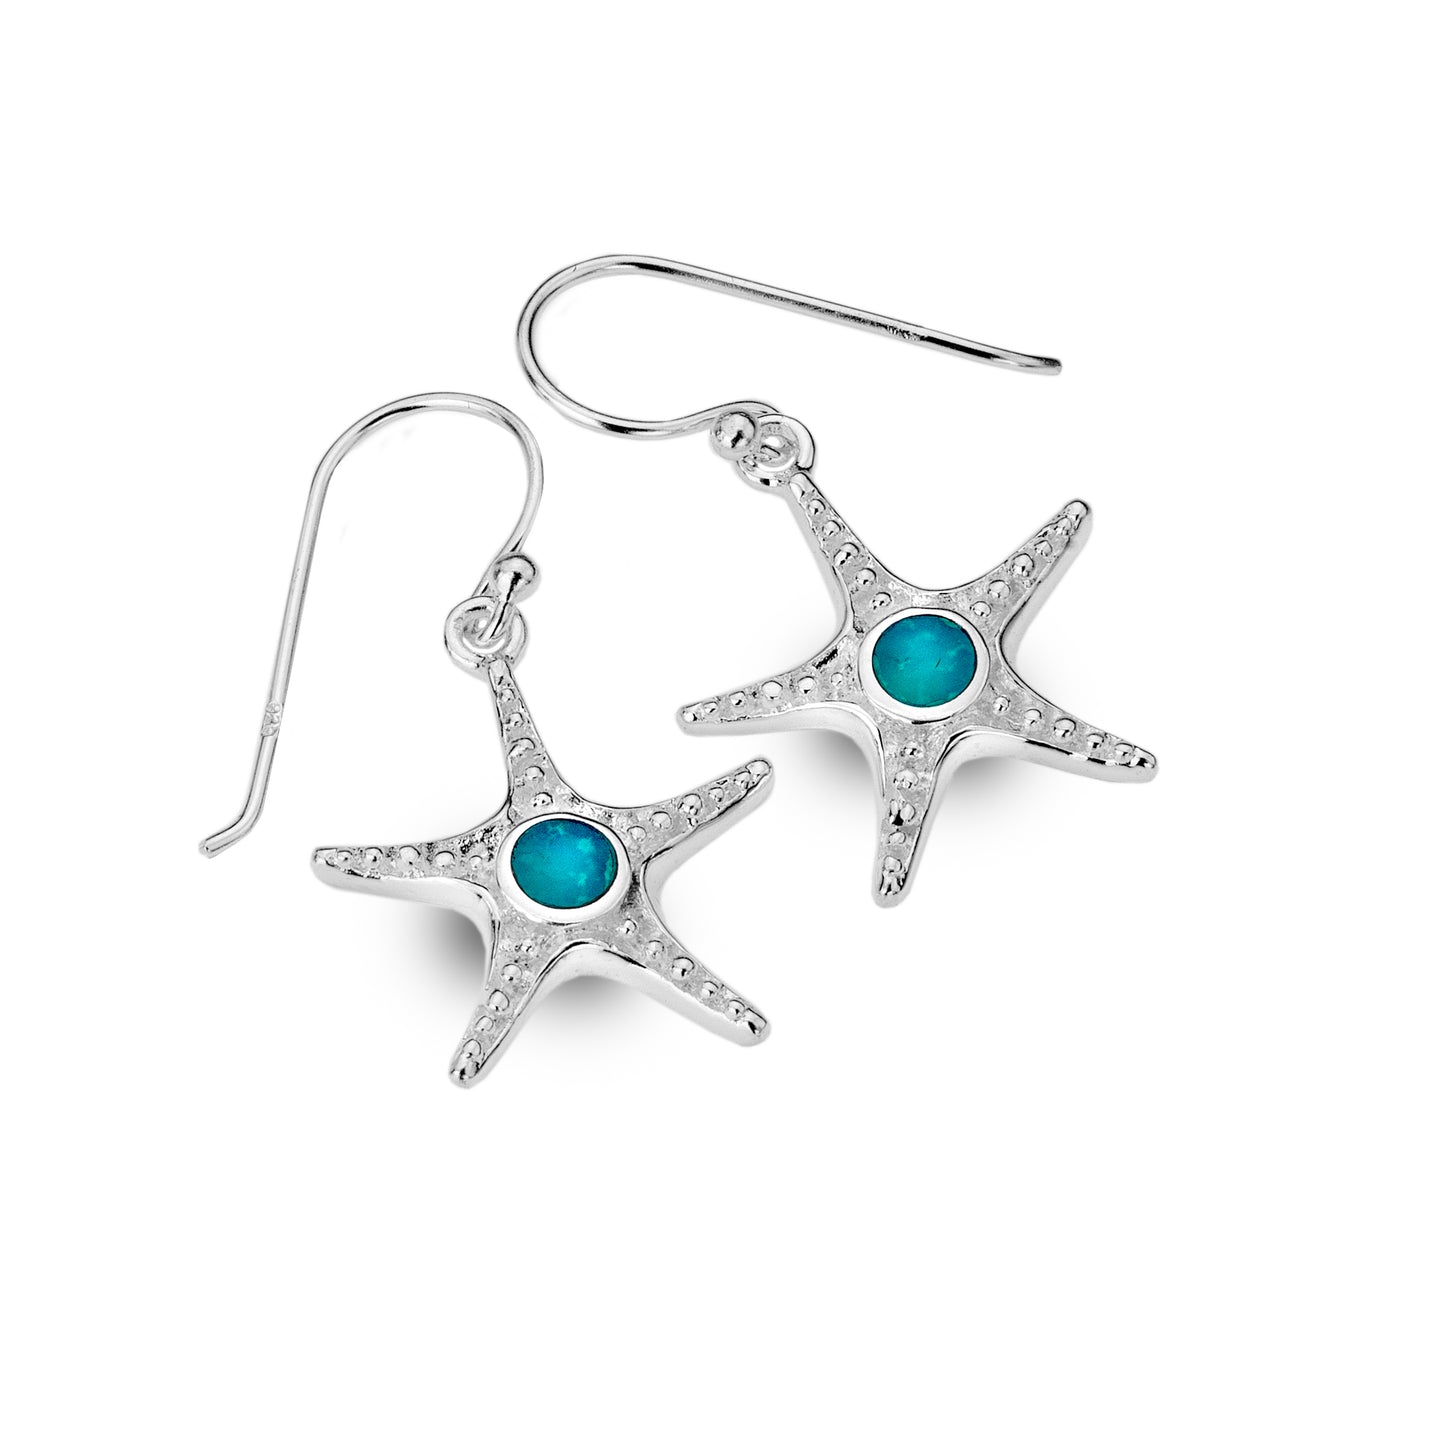 Turquoise Starfish earrings